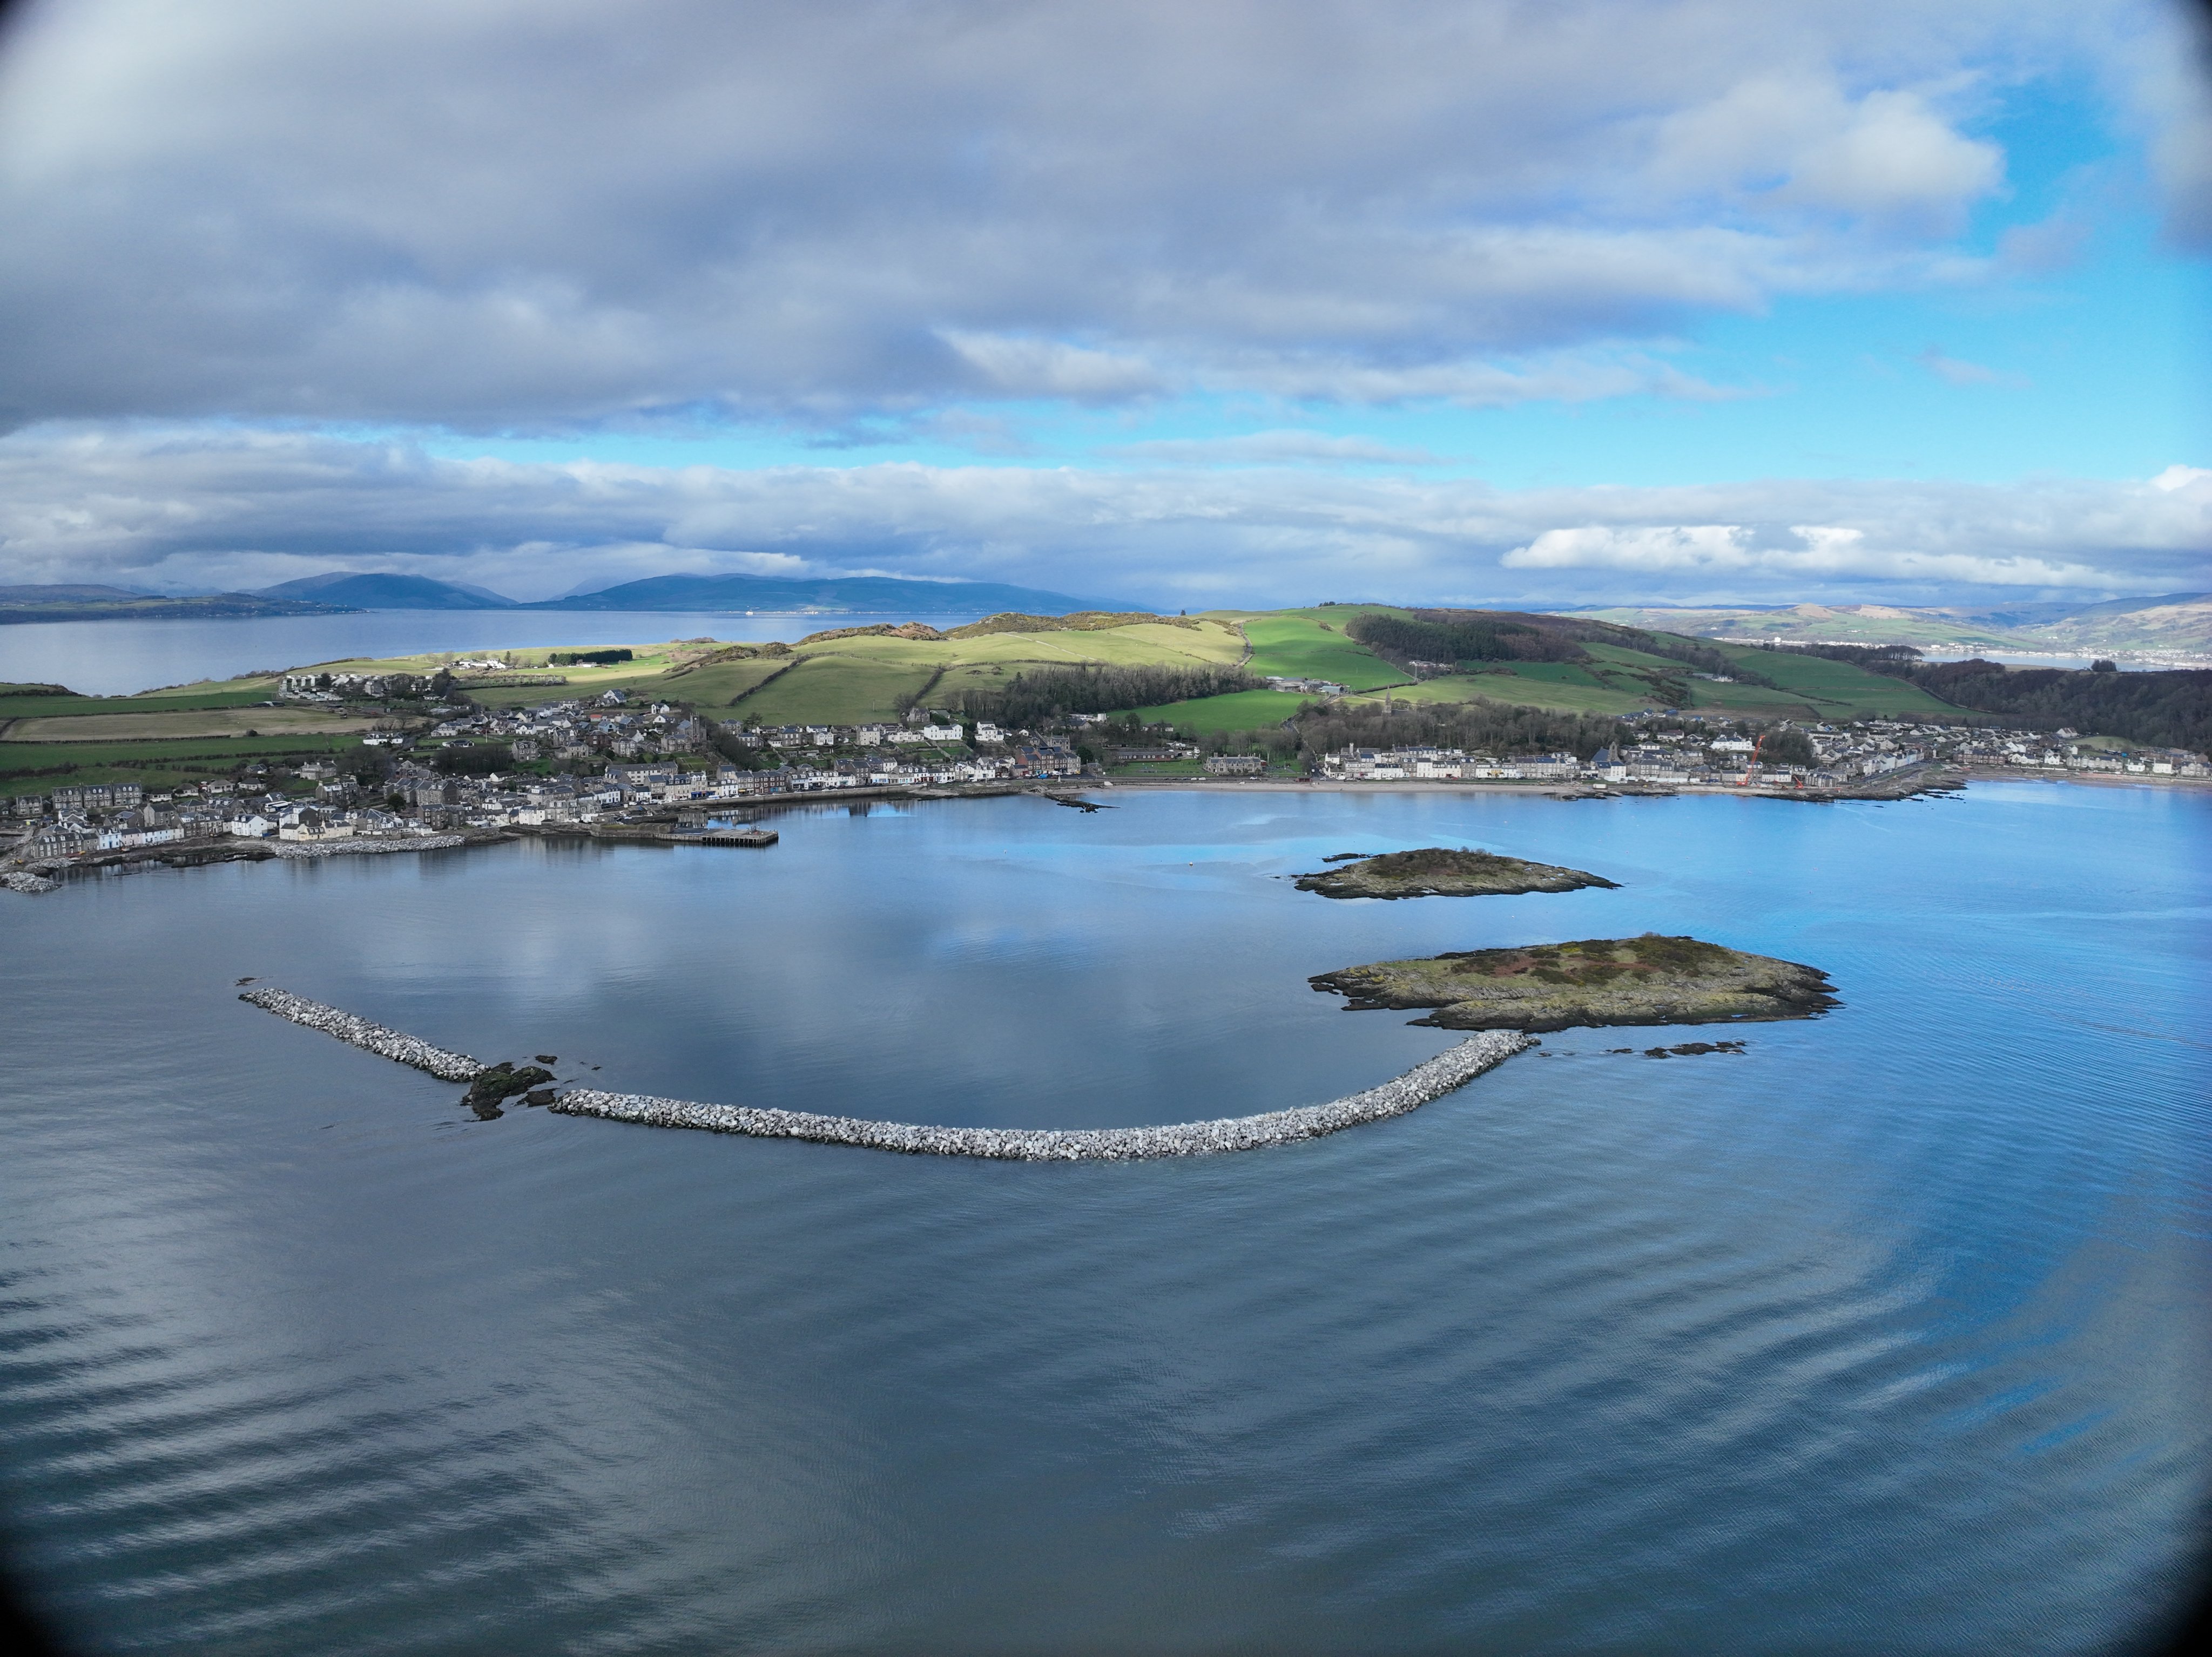 Isle of Cumbrae flood protection scheme reaches major milestone